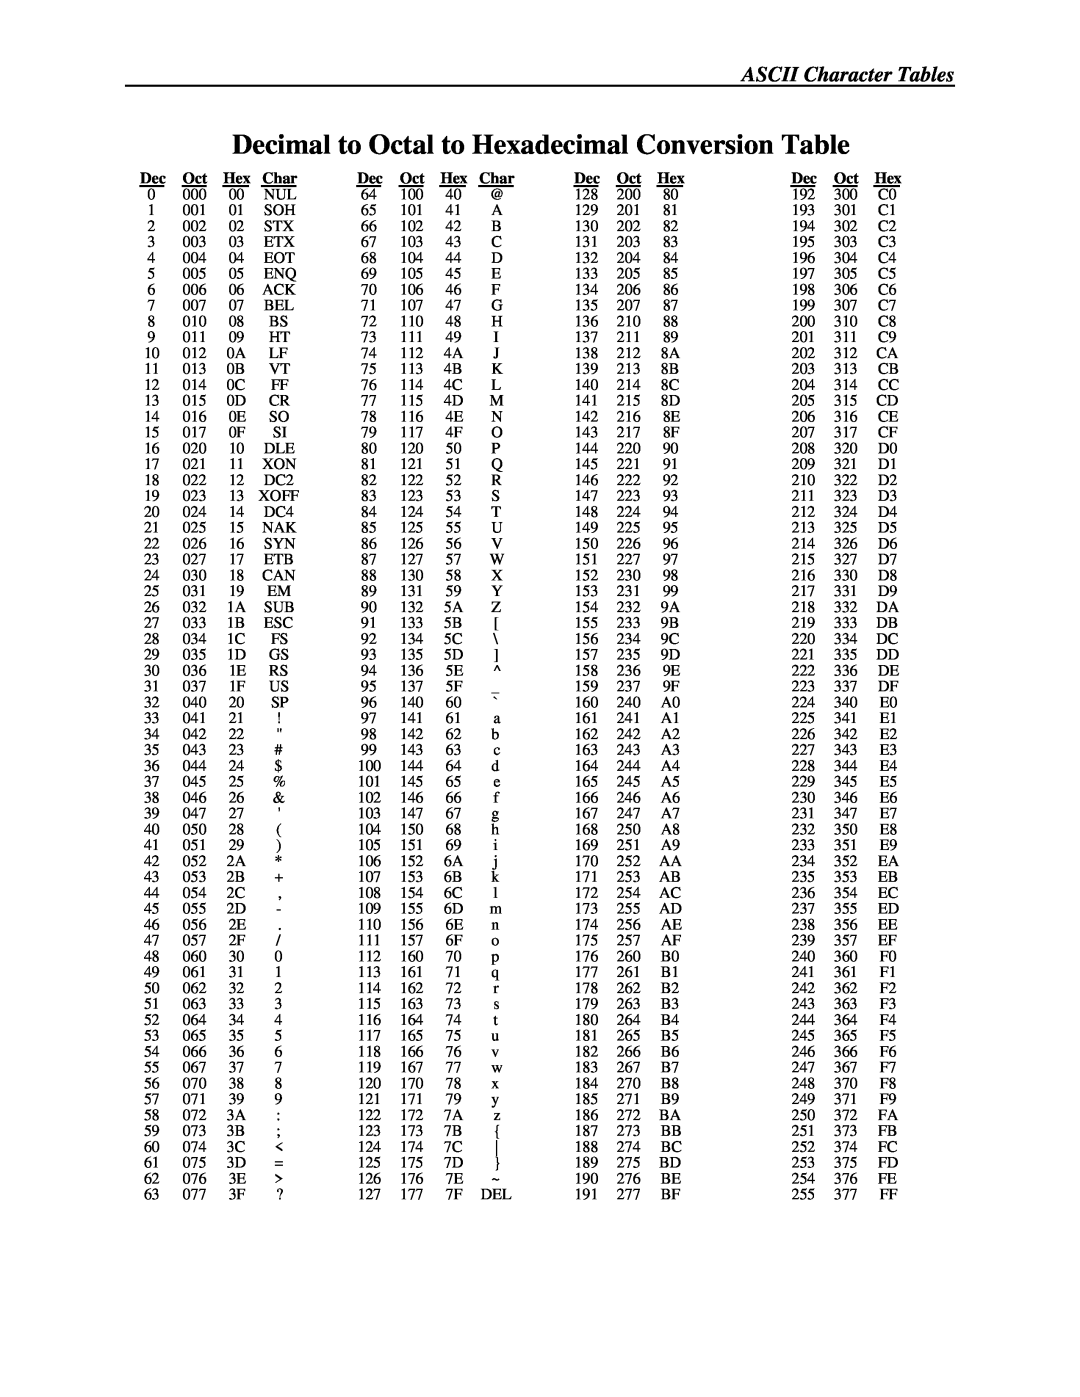 Printek 4500, 4503, 4300 manual Decimal to Octal to Hexadecimal Conversion Table, Char 